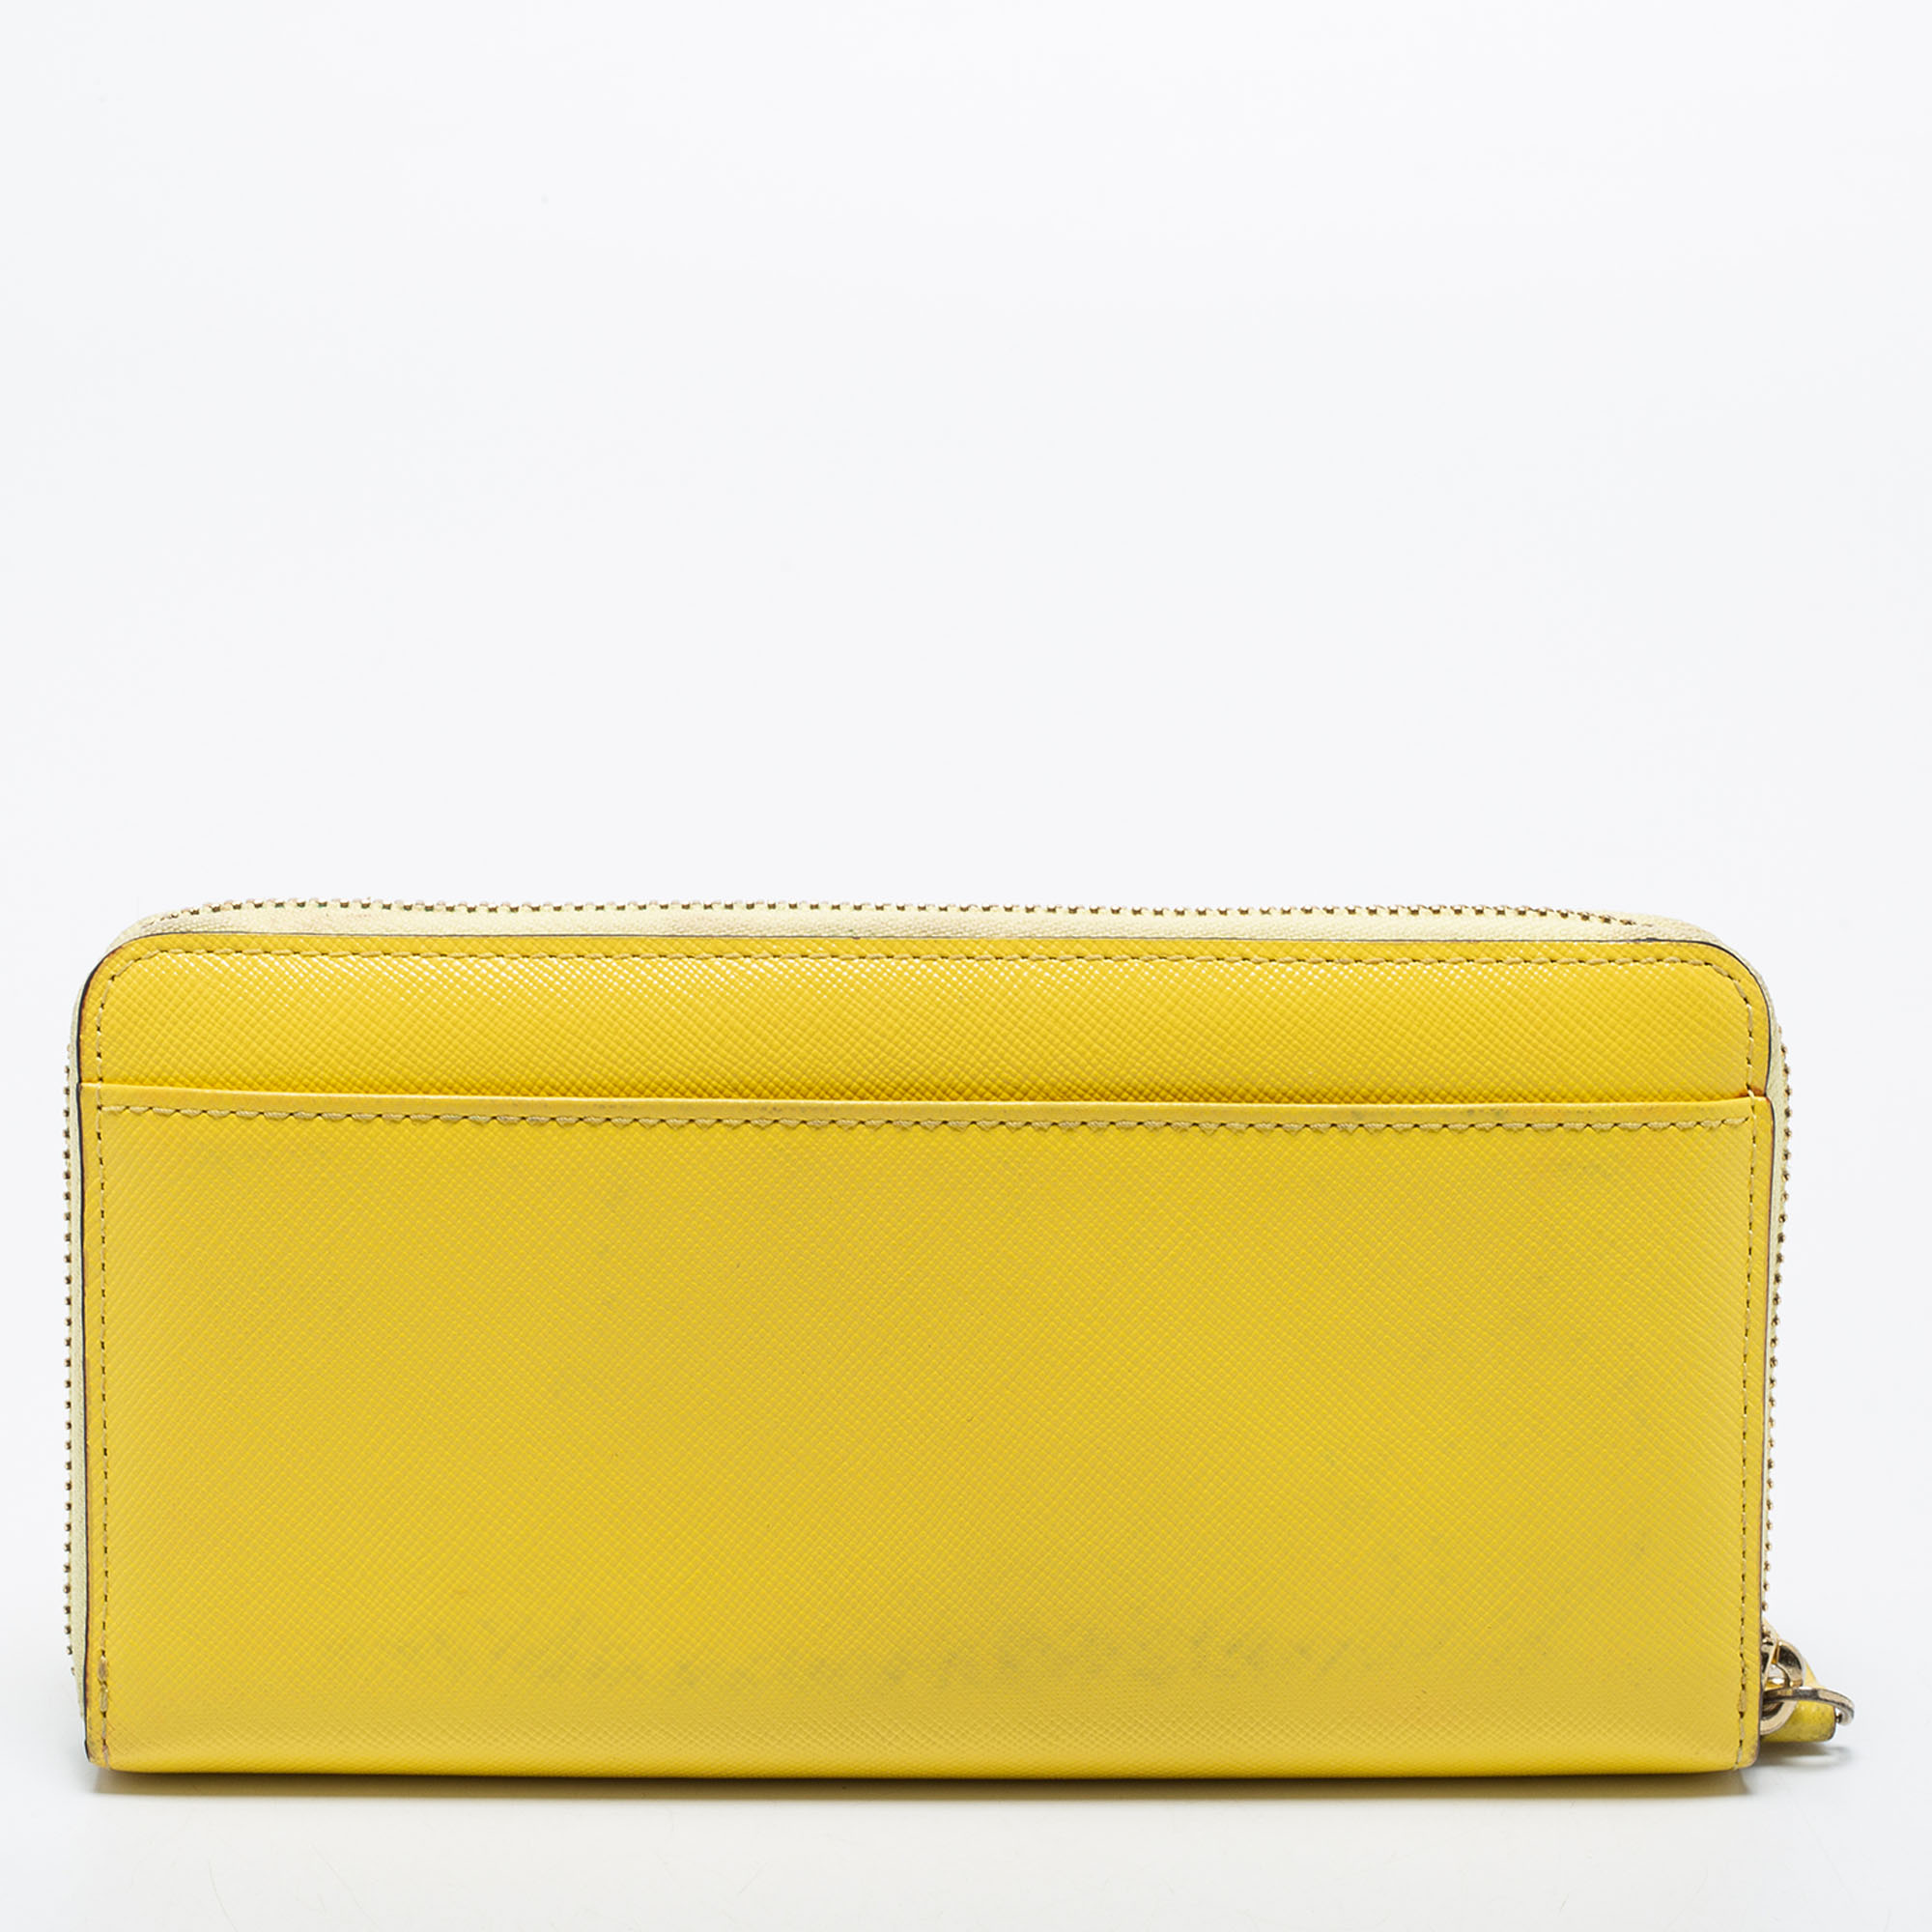 Kate Spade Yellow Leather Zip Around Wallet